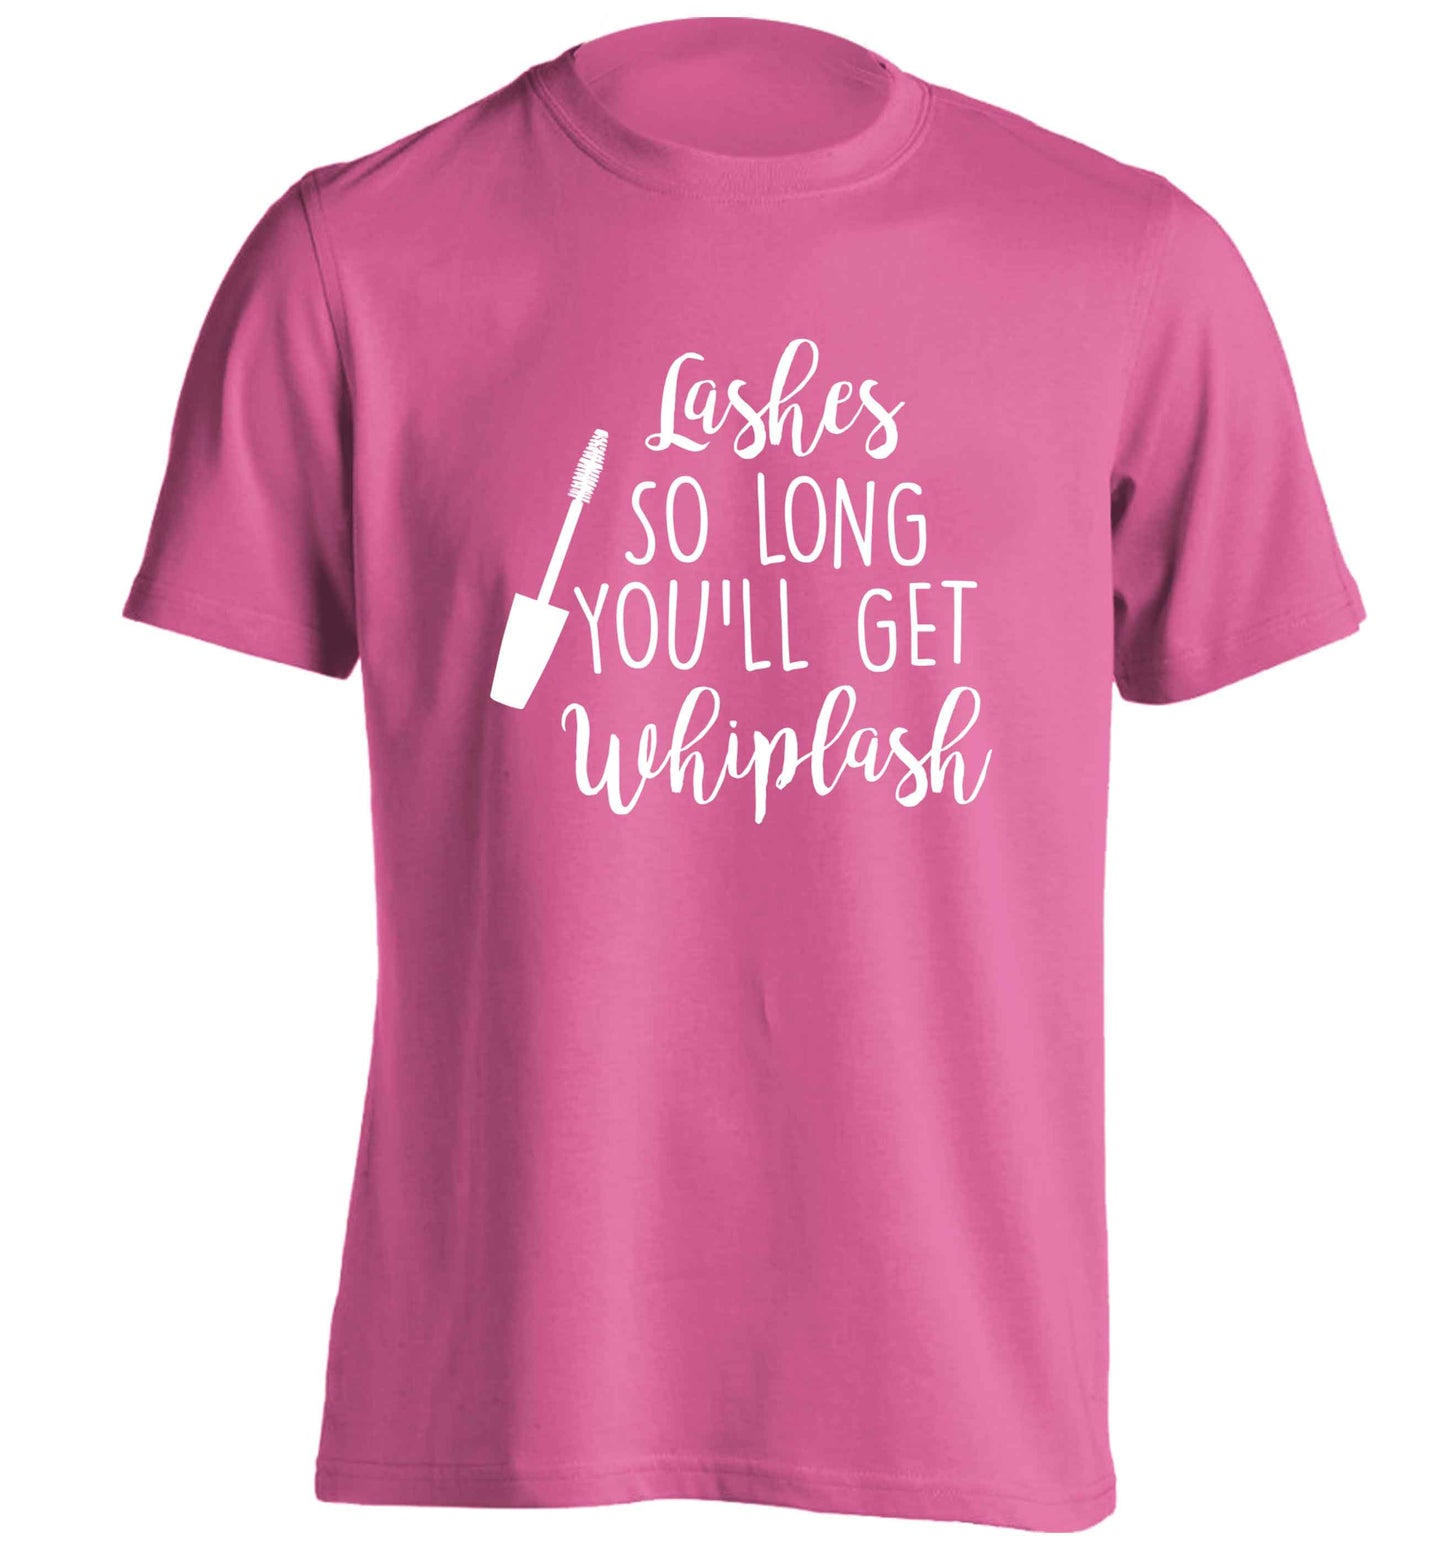 Lashes so long you'll get whiplash adults unisex pink Tshirt 2XL